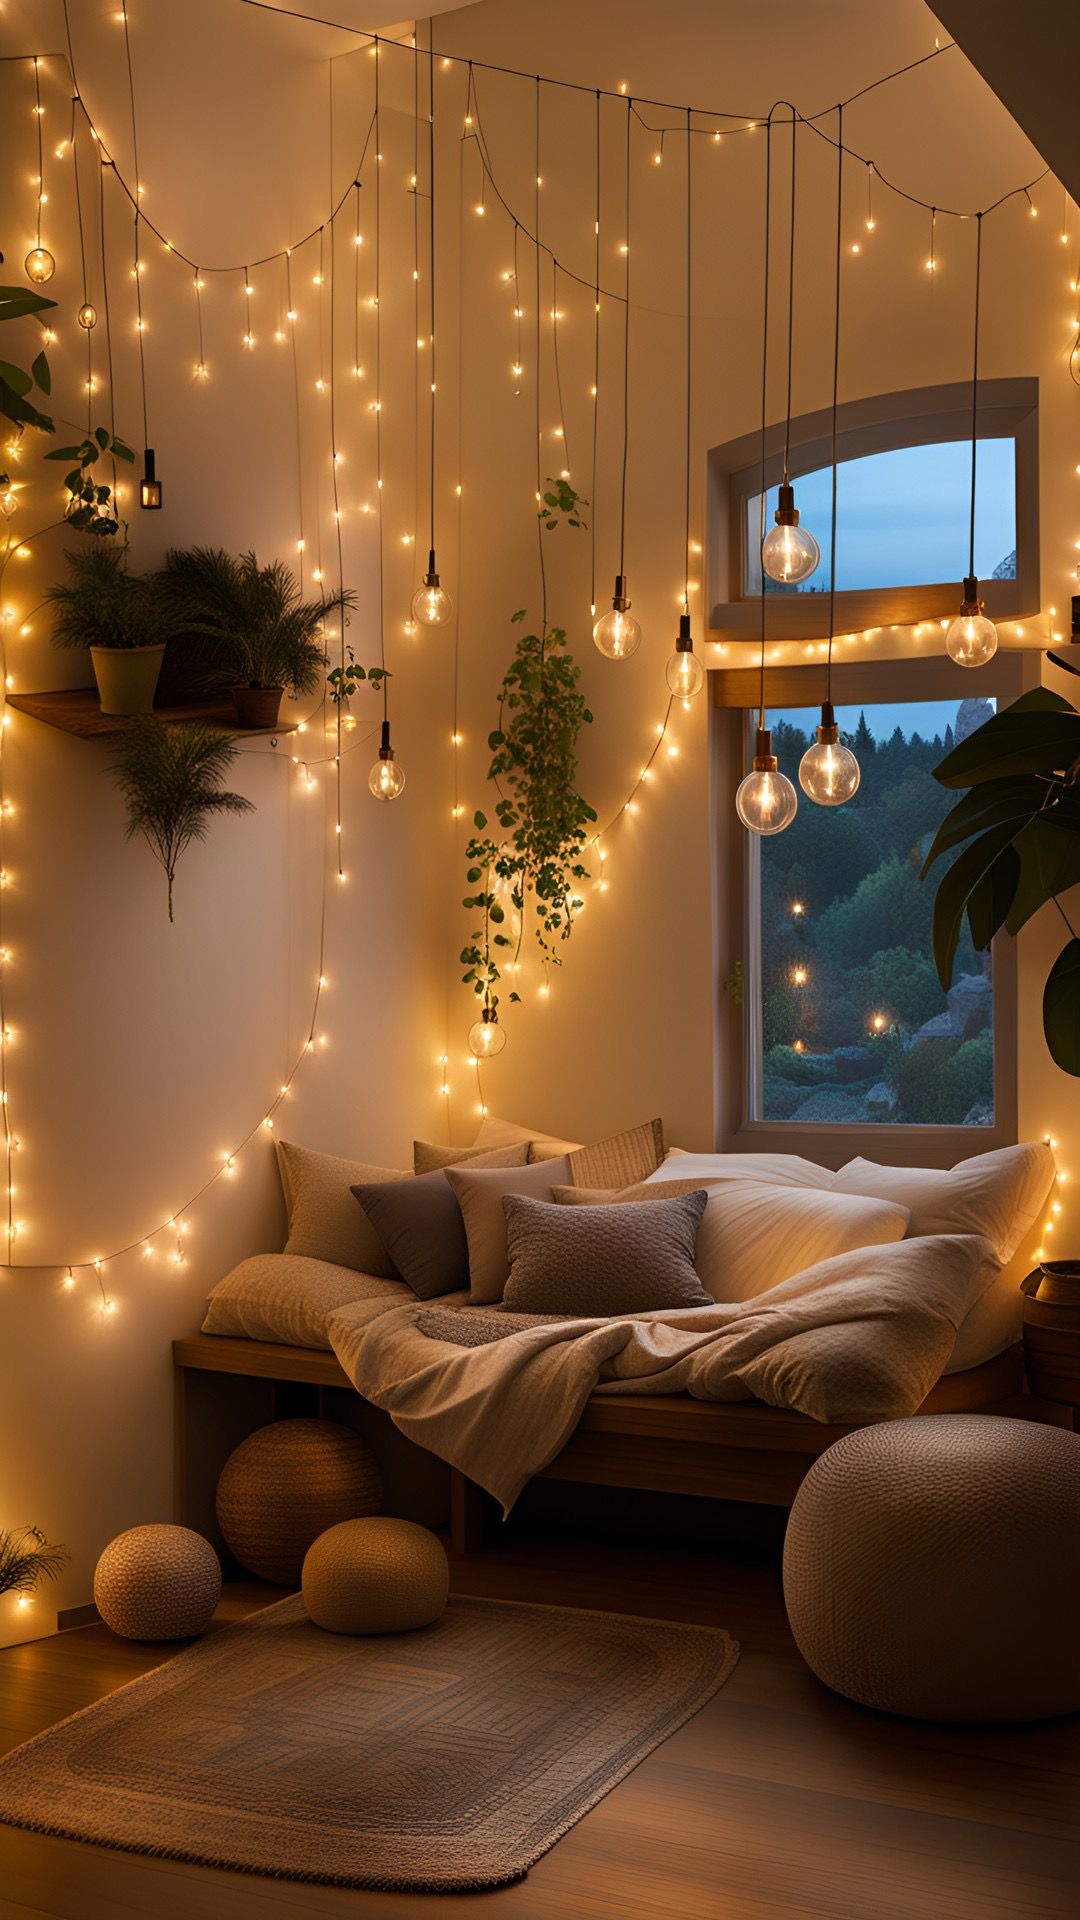 Bedroom Mood Lighting : Pictures, Ideas